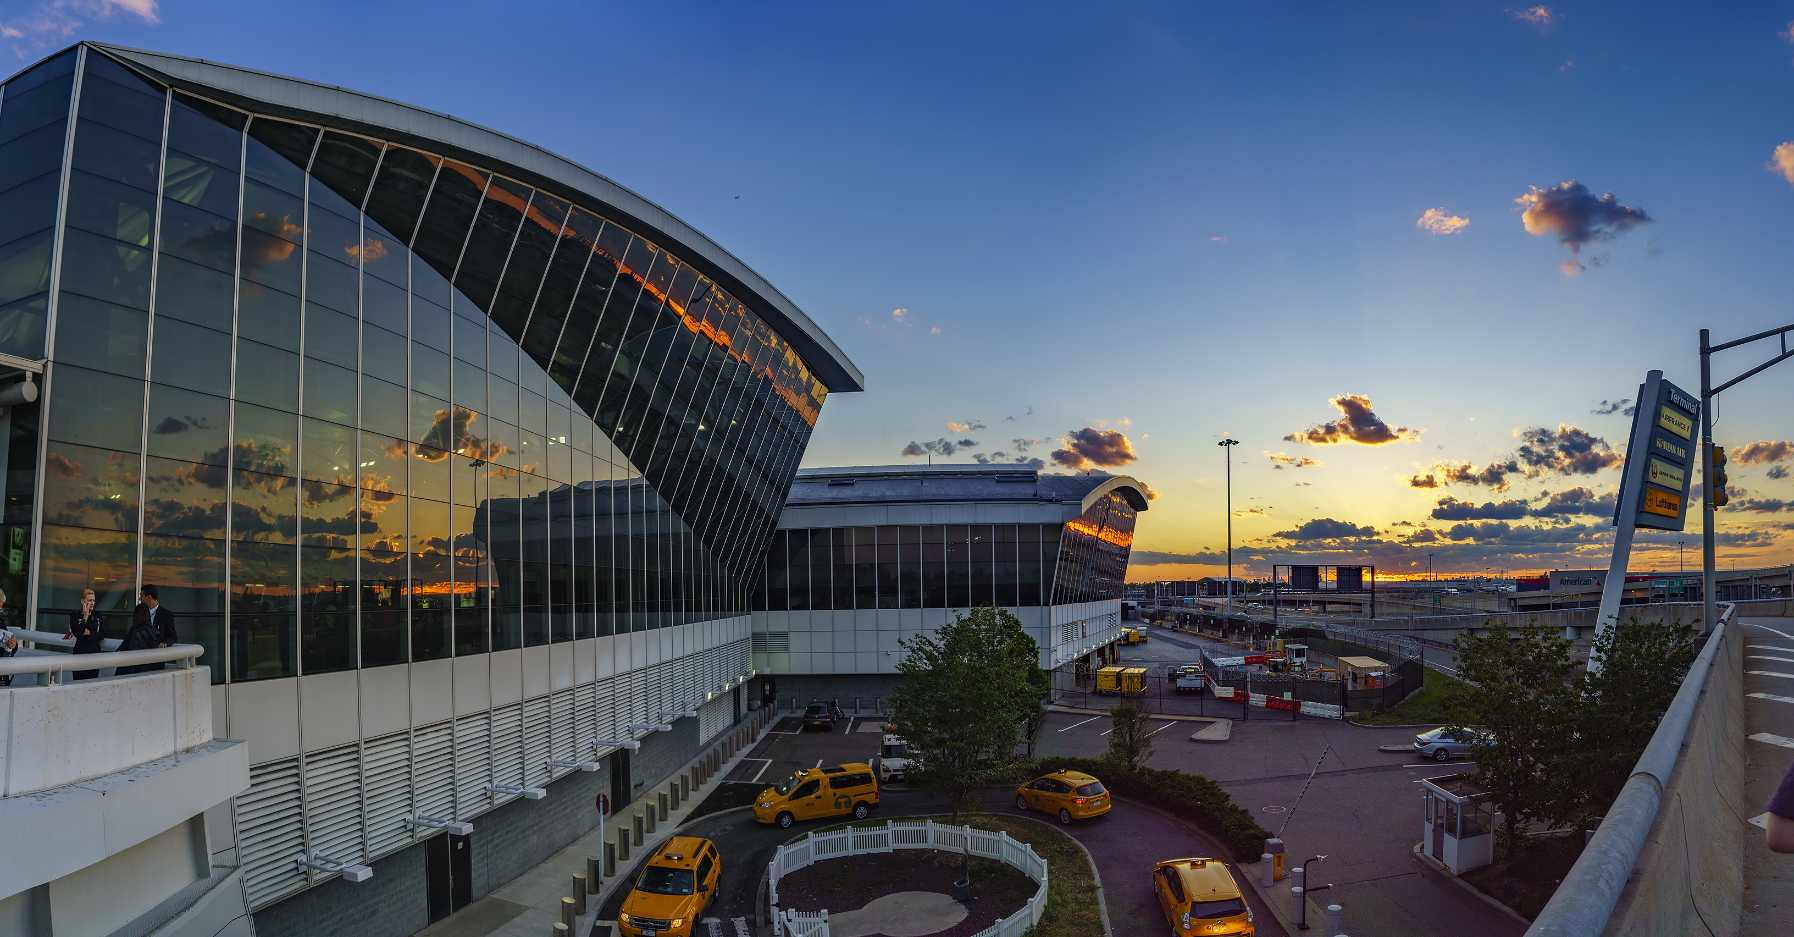 Exterior Of The JFK Airport New York City 